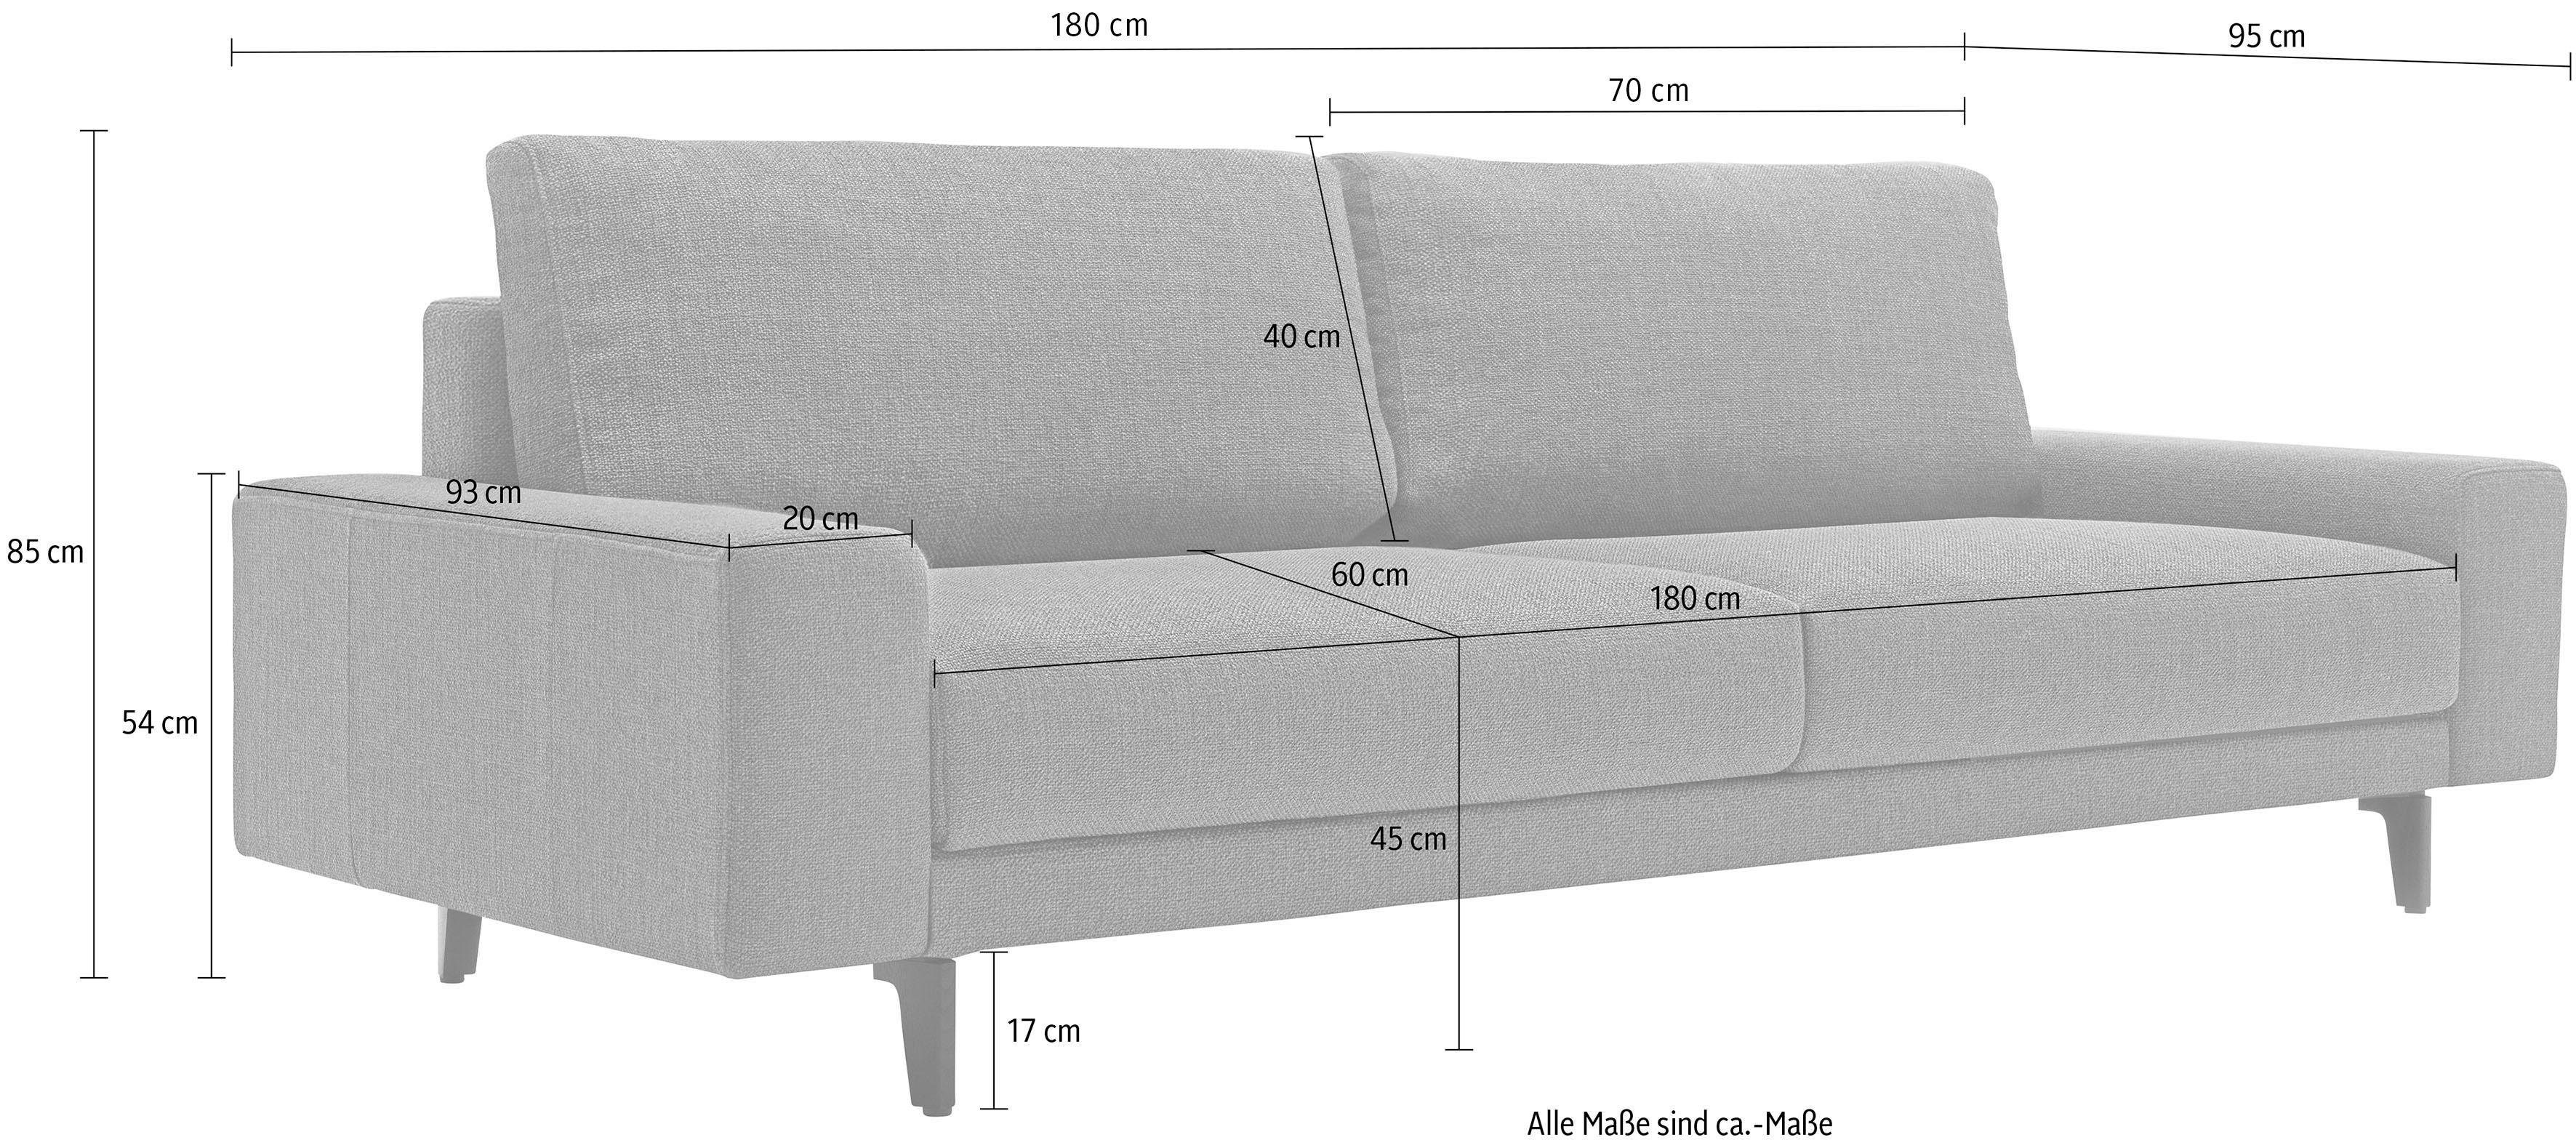 hülsta sofa 2-Sitzer hs.450, in cm Alugussfüße Breite umbragrau, niedrig, 180 Armlehne breit